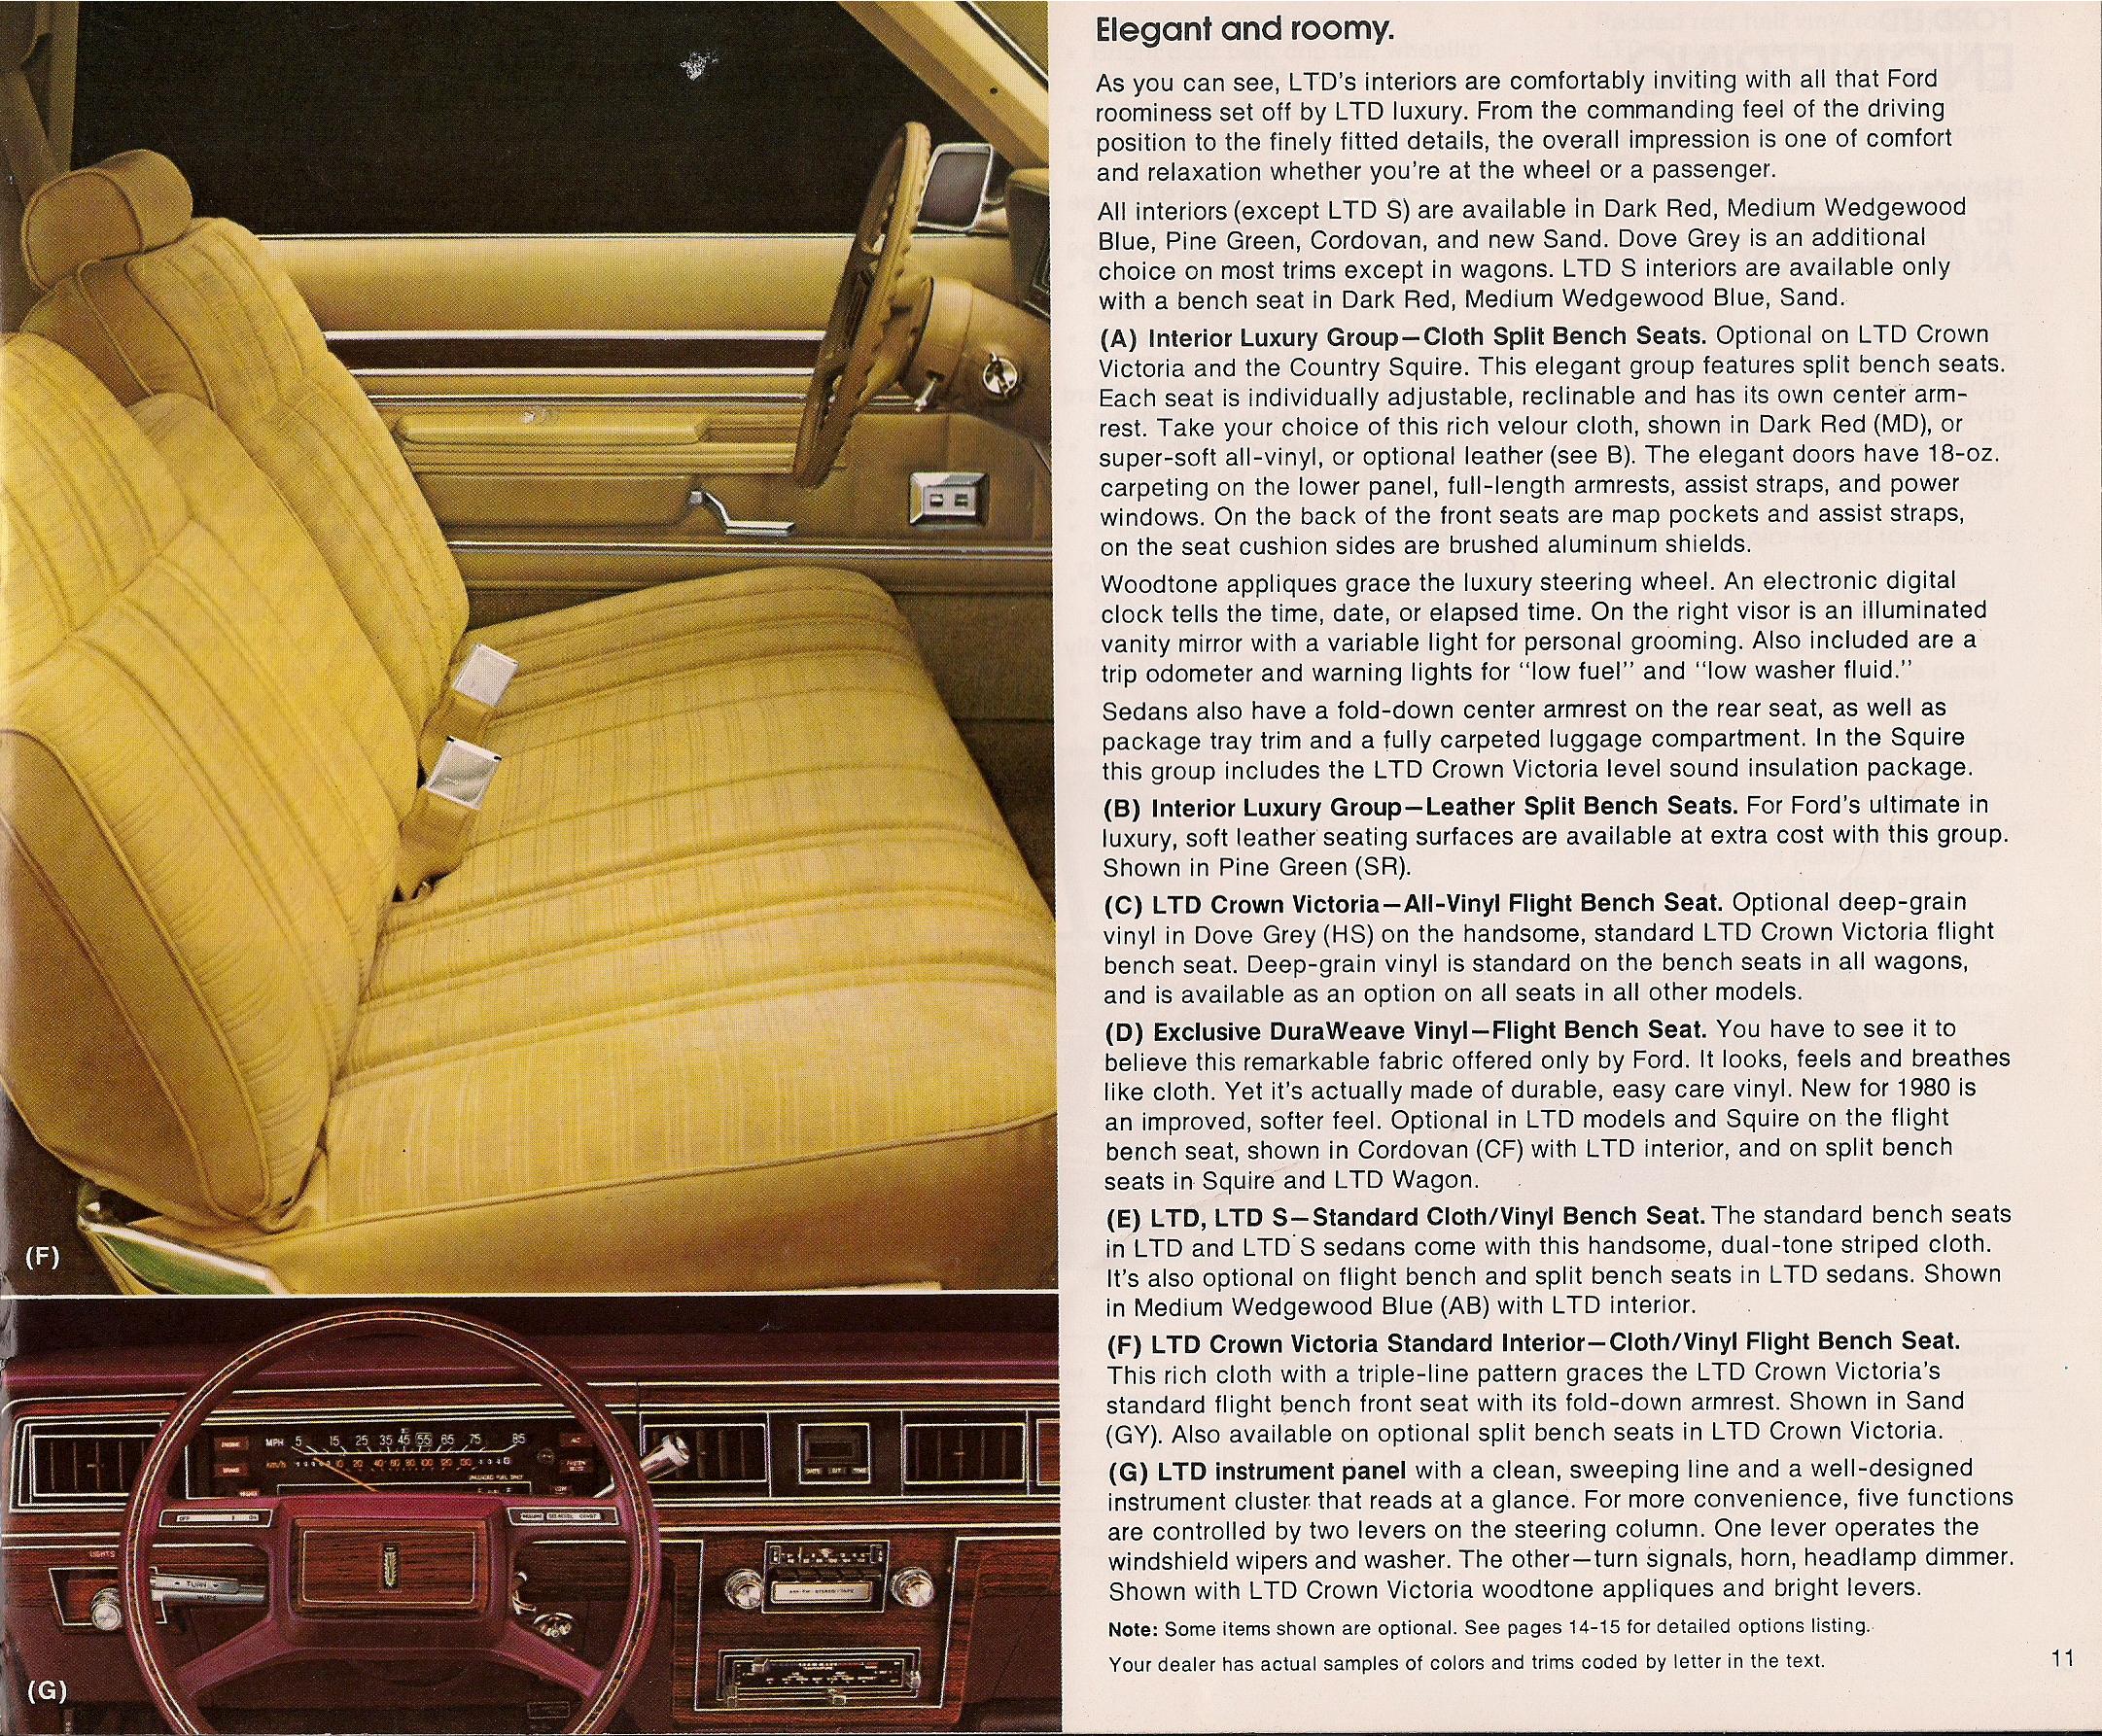 1980 Ford LTD Brochure Page 15